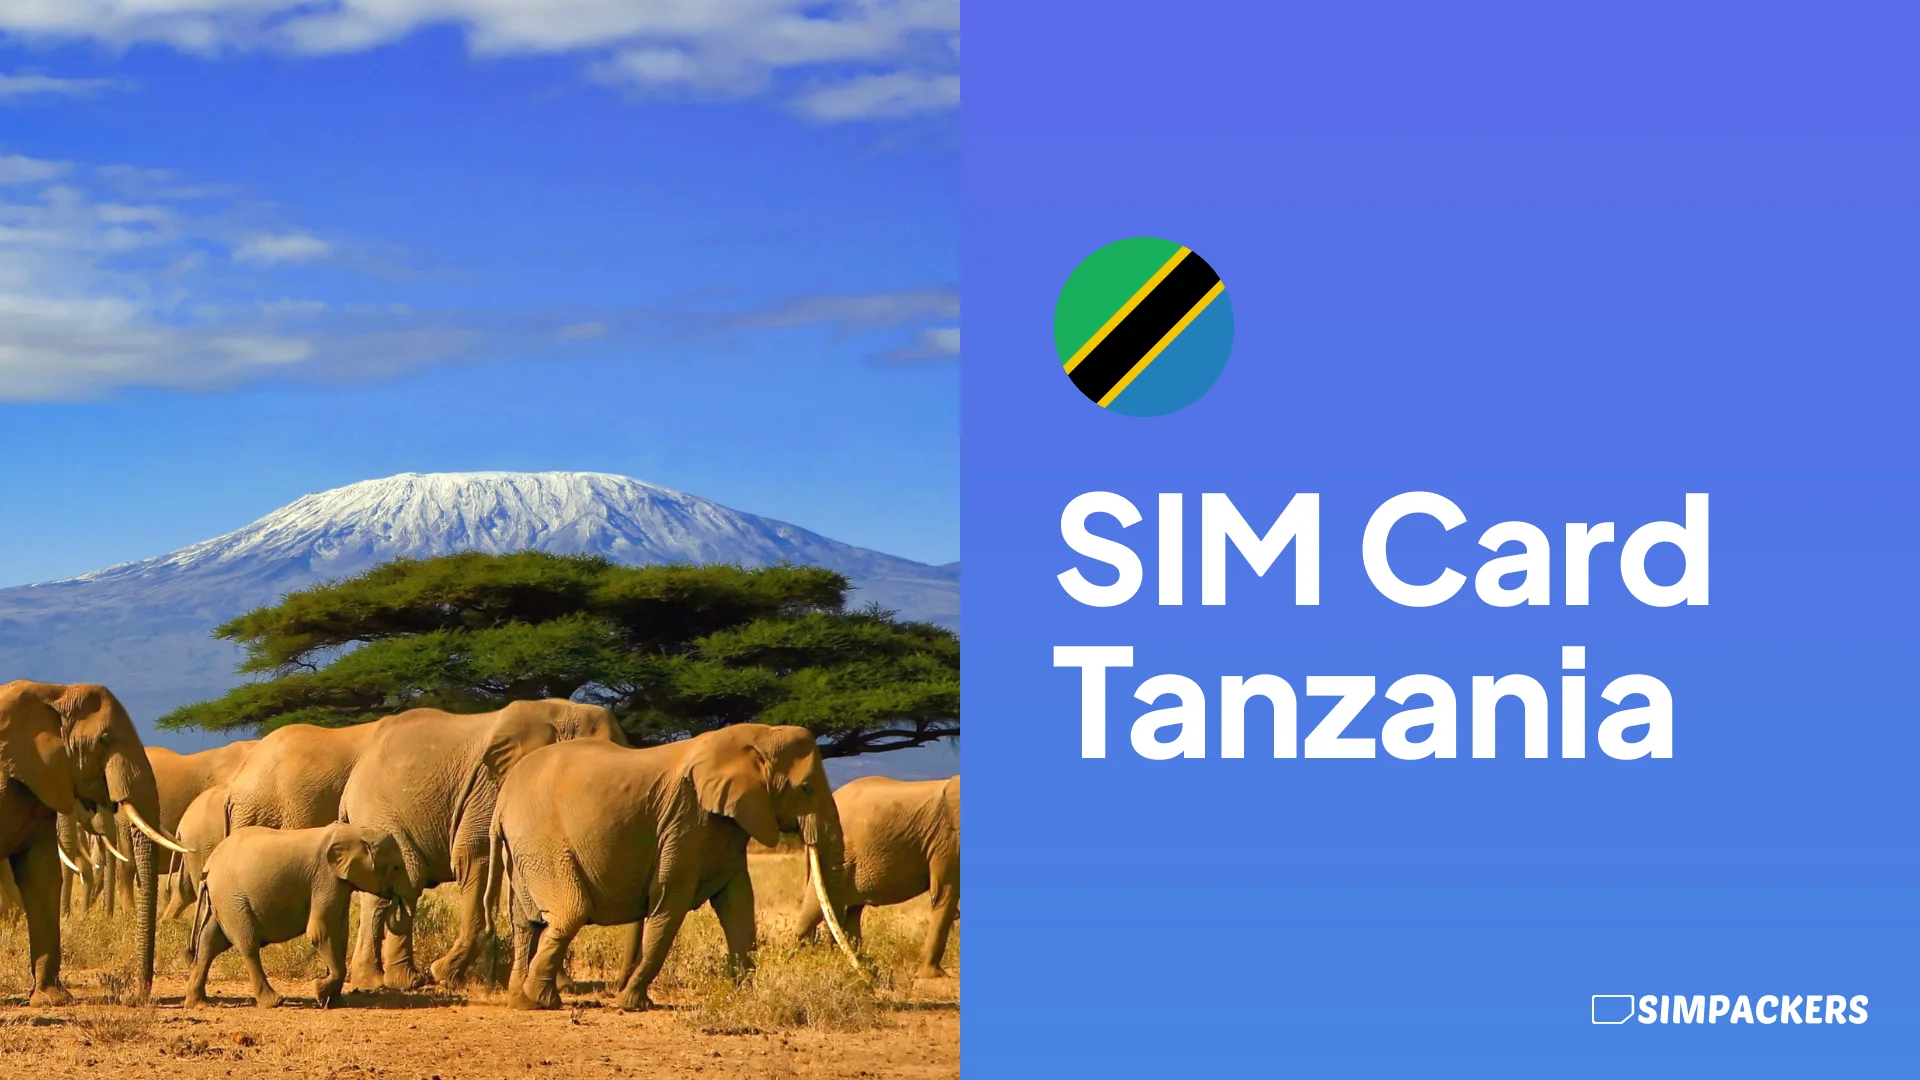 EN/FEATURED_IMAGES/sim-card-tanzania.webp